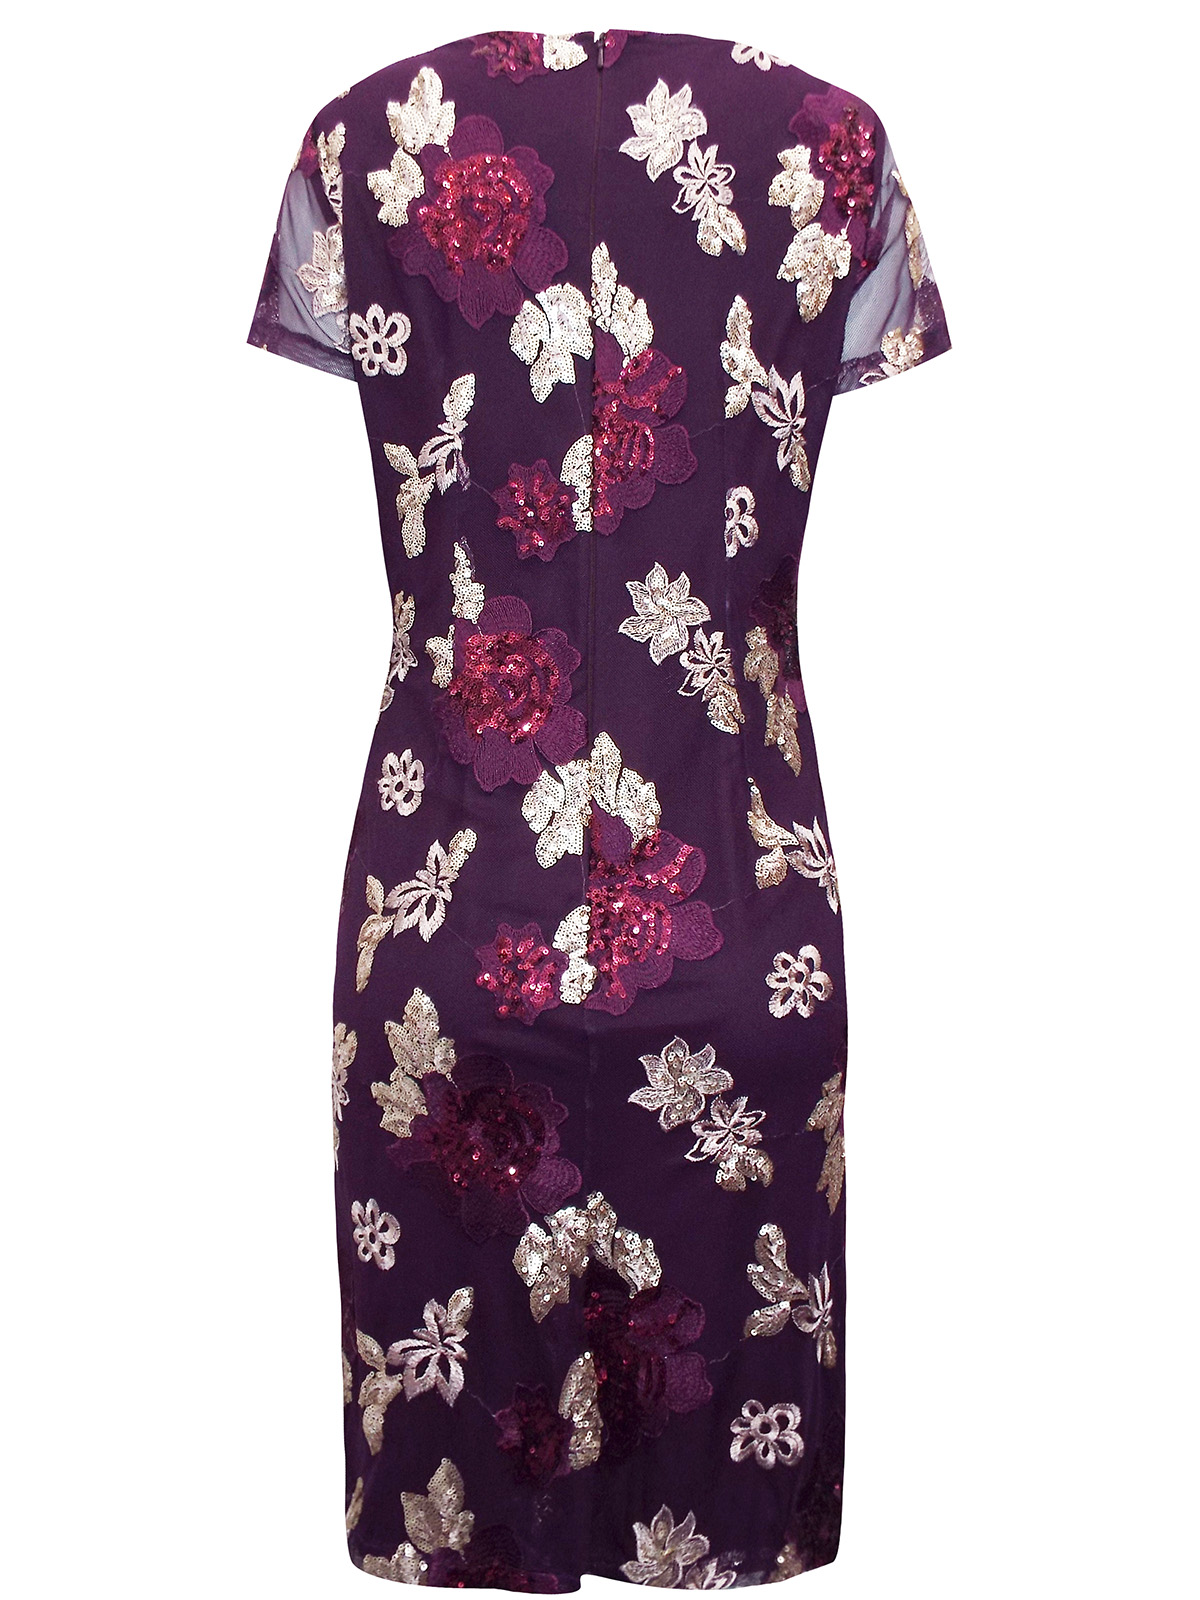 M&Co - - M&Co WINE Floral Sequin Embellished Shift Dress - Size 8 to 16